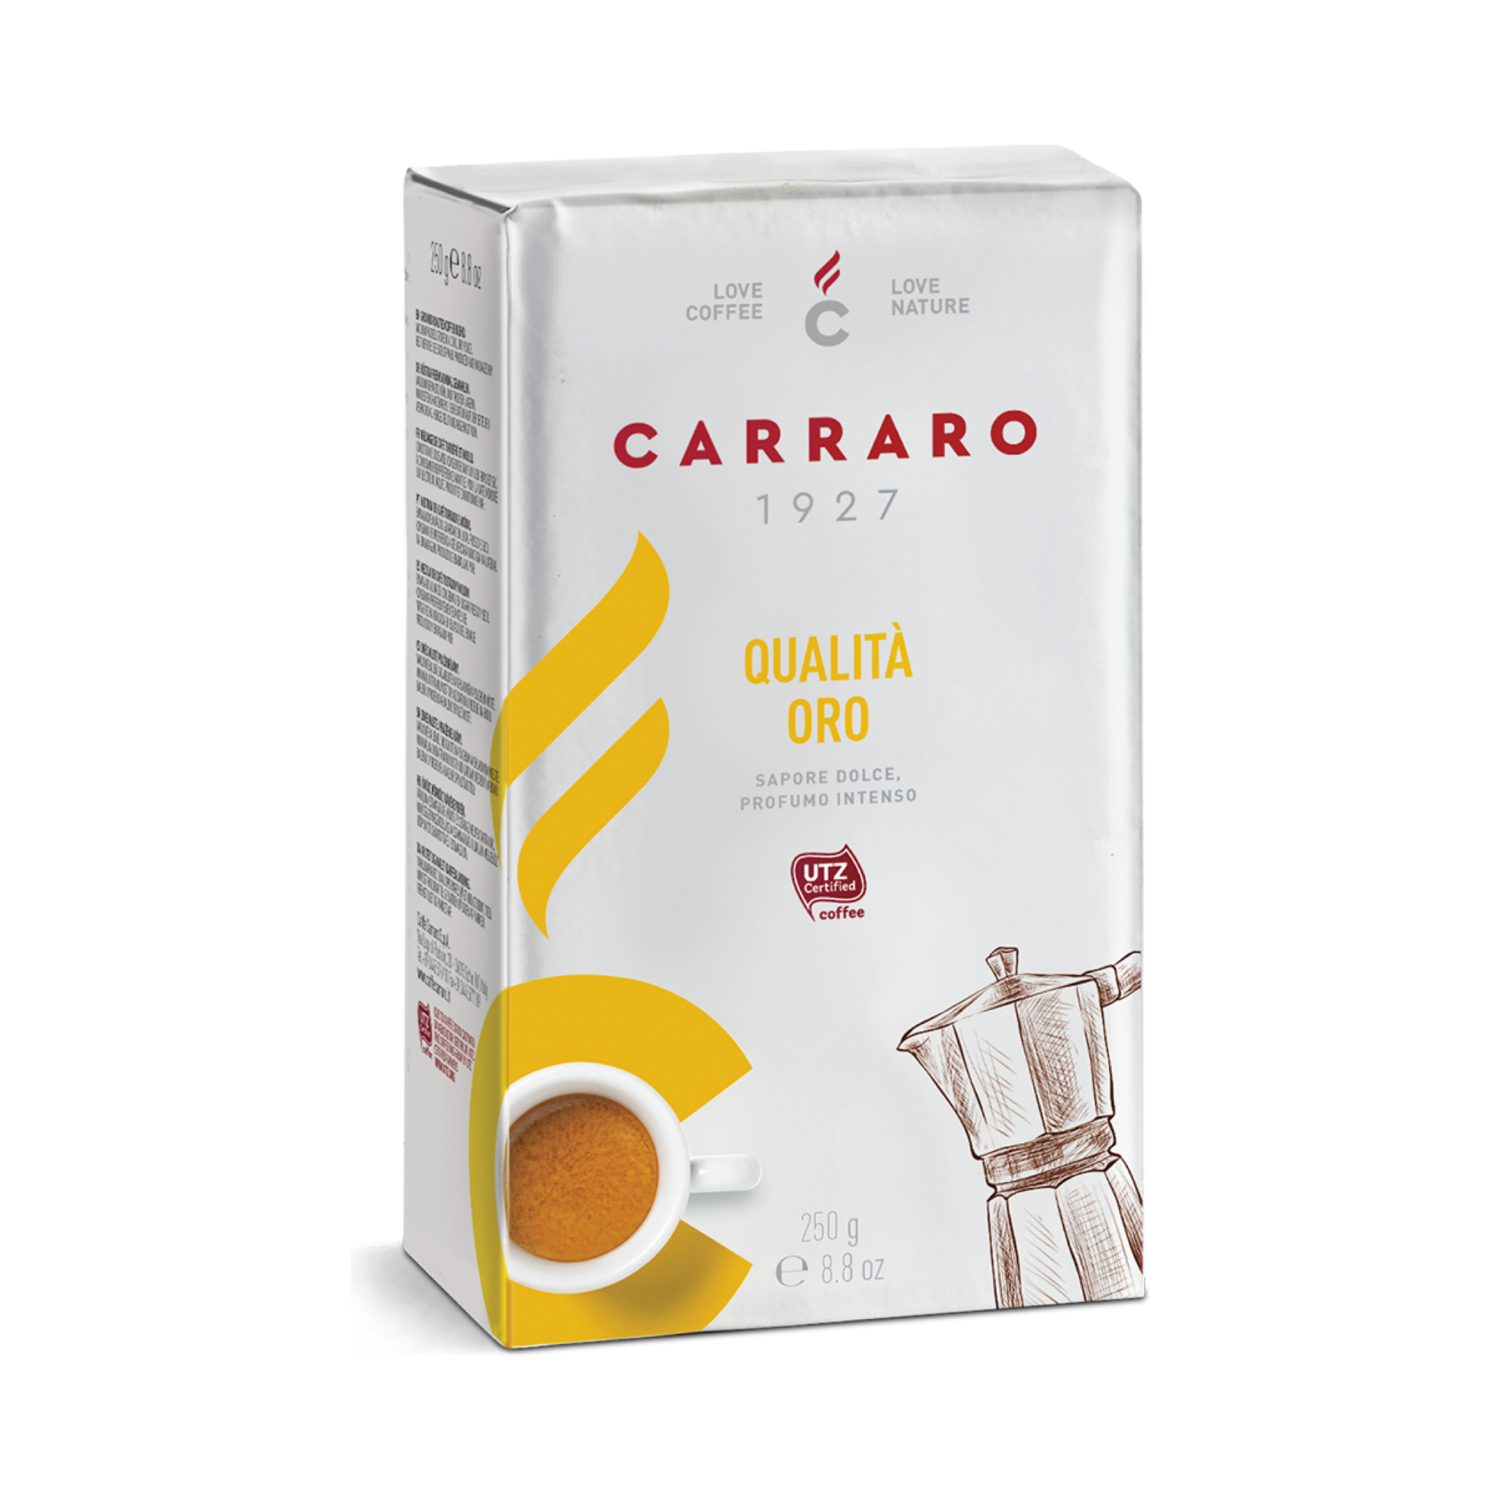 Carraro 1927 Qualita Oro 90% Arabica мелено еспресо